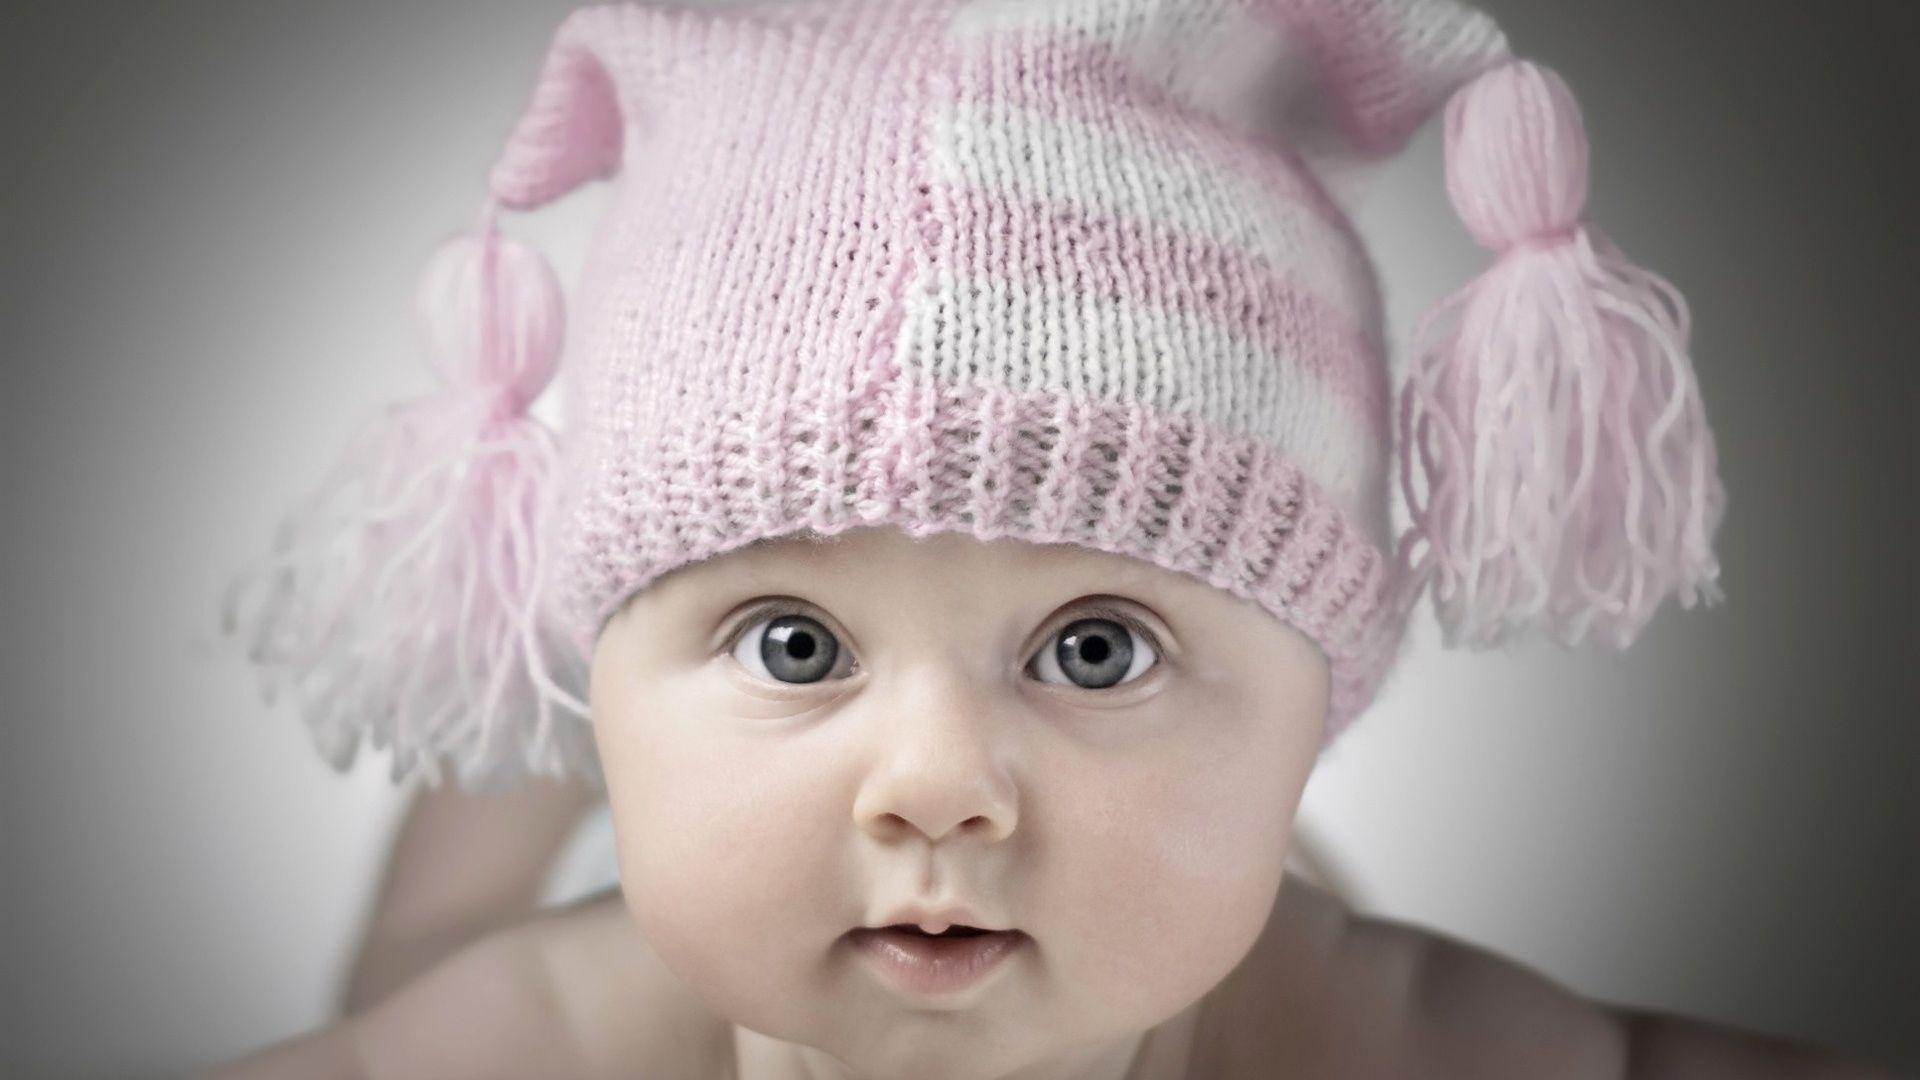 Cute Baby Boy Wearing a Cap HD Wallpapers  HD Wallpapers